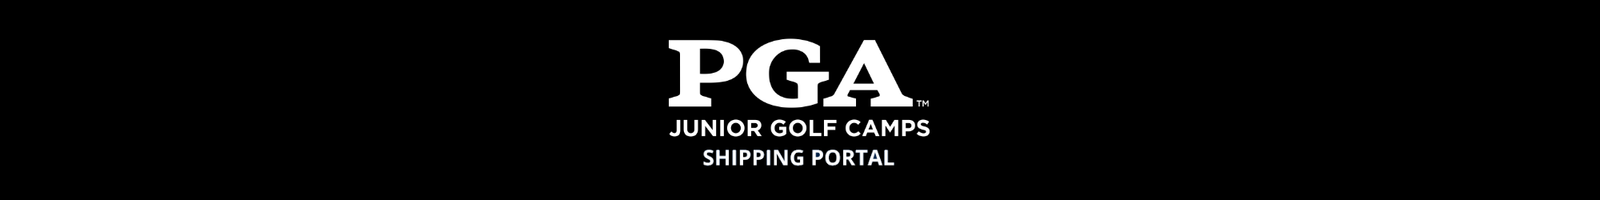 PGA Junior Golf Camp Shipping Portal